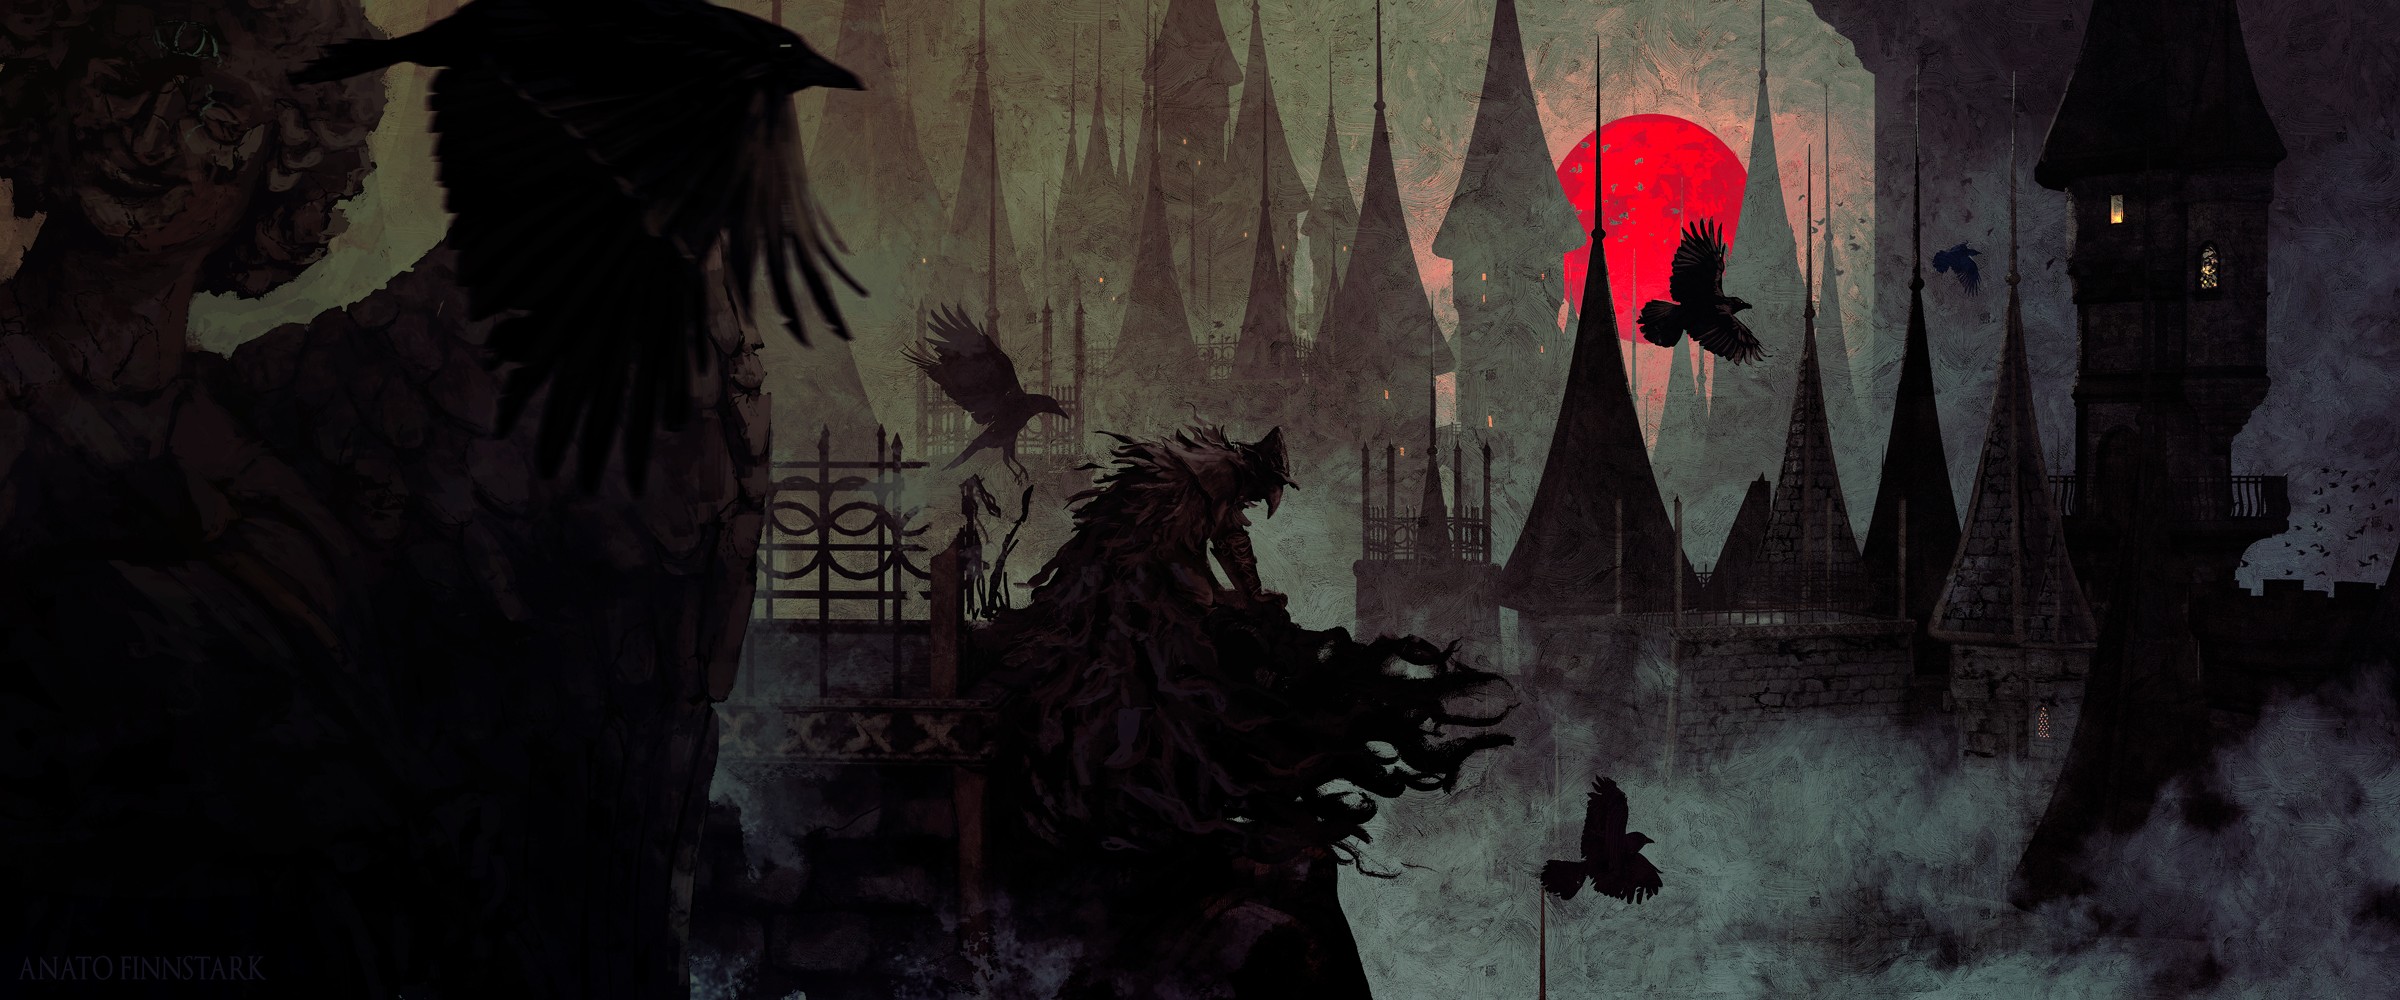 General 2400x1000 fantasy art Bloodborne Blood moon crow hunter artwork Anato Finnstark digital art